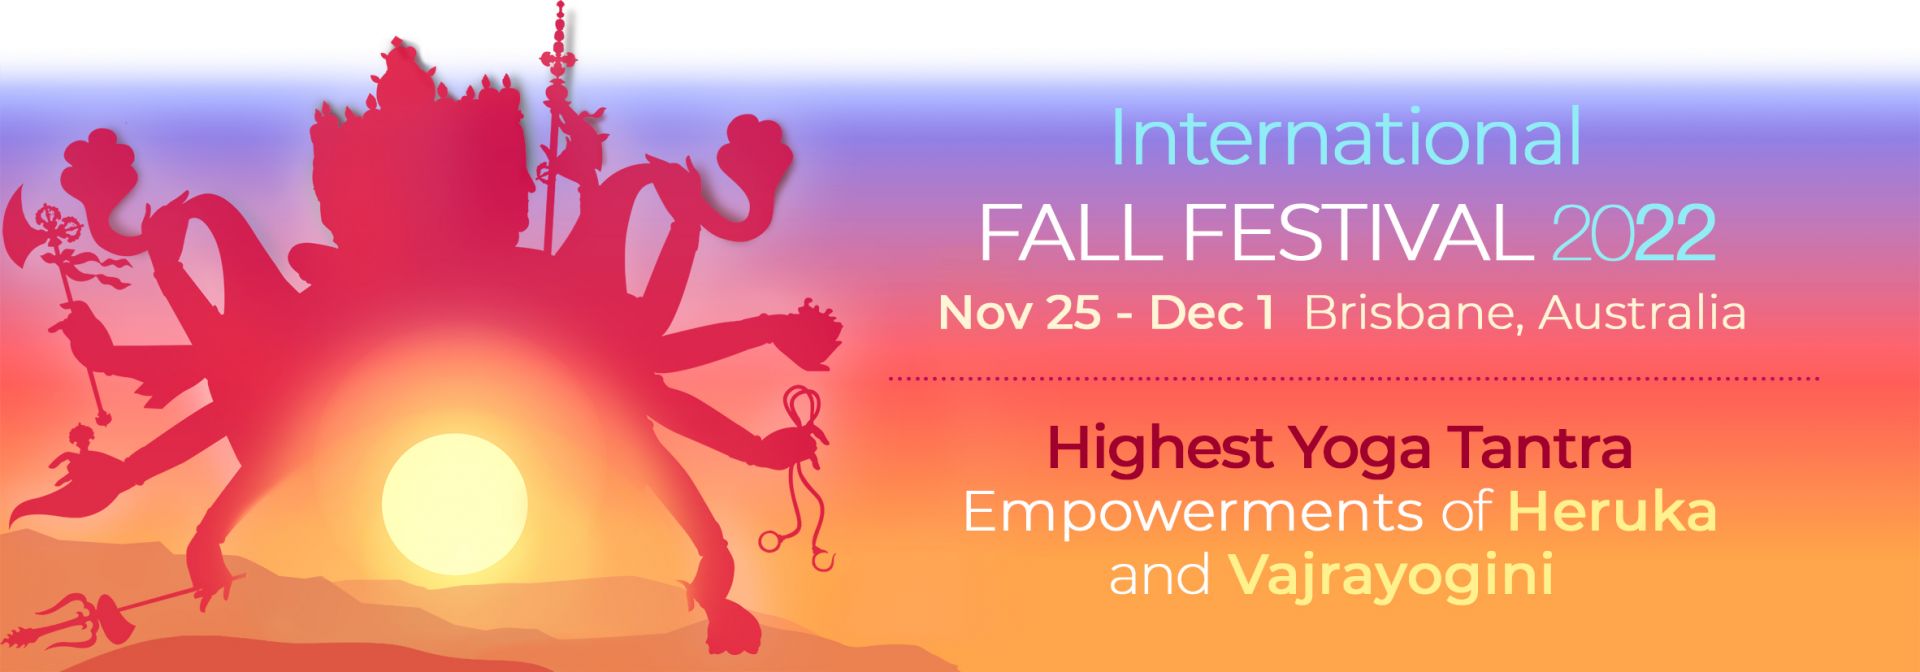 International Fall Festival 2022